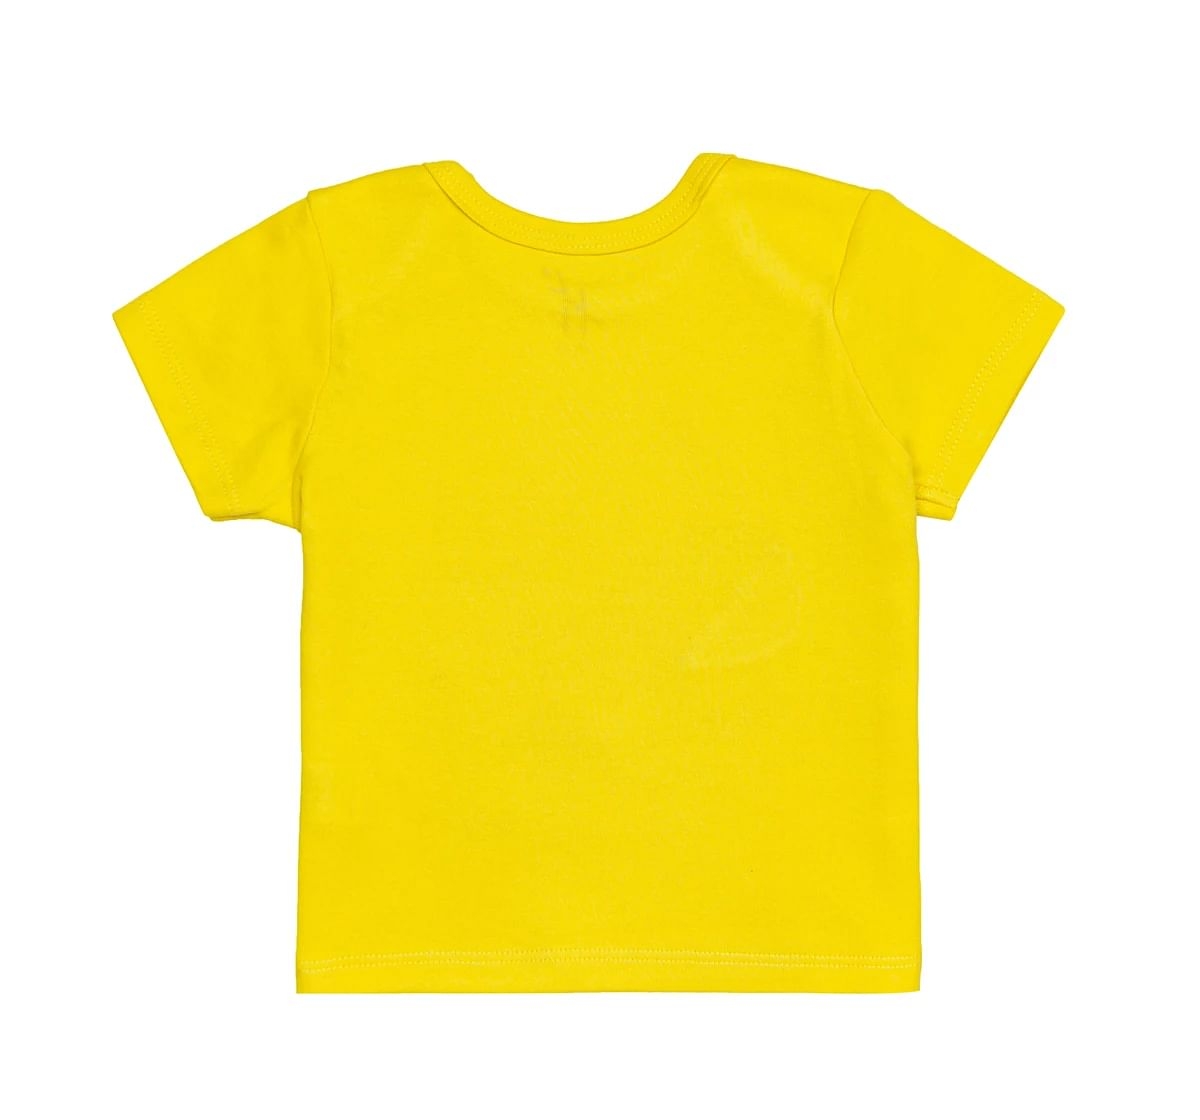 H by Hamleys Boys Short Sleeves T-Shirt Set Dolphin Print-Pack of 2-Multi